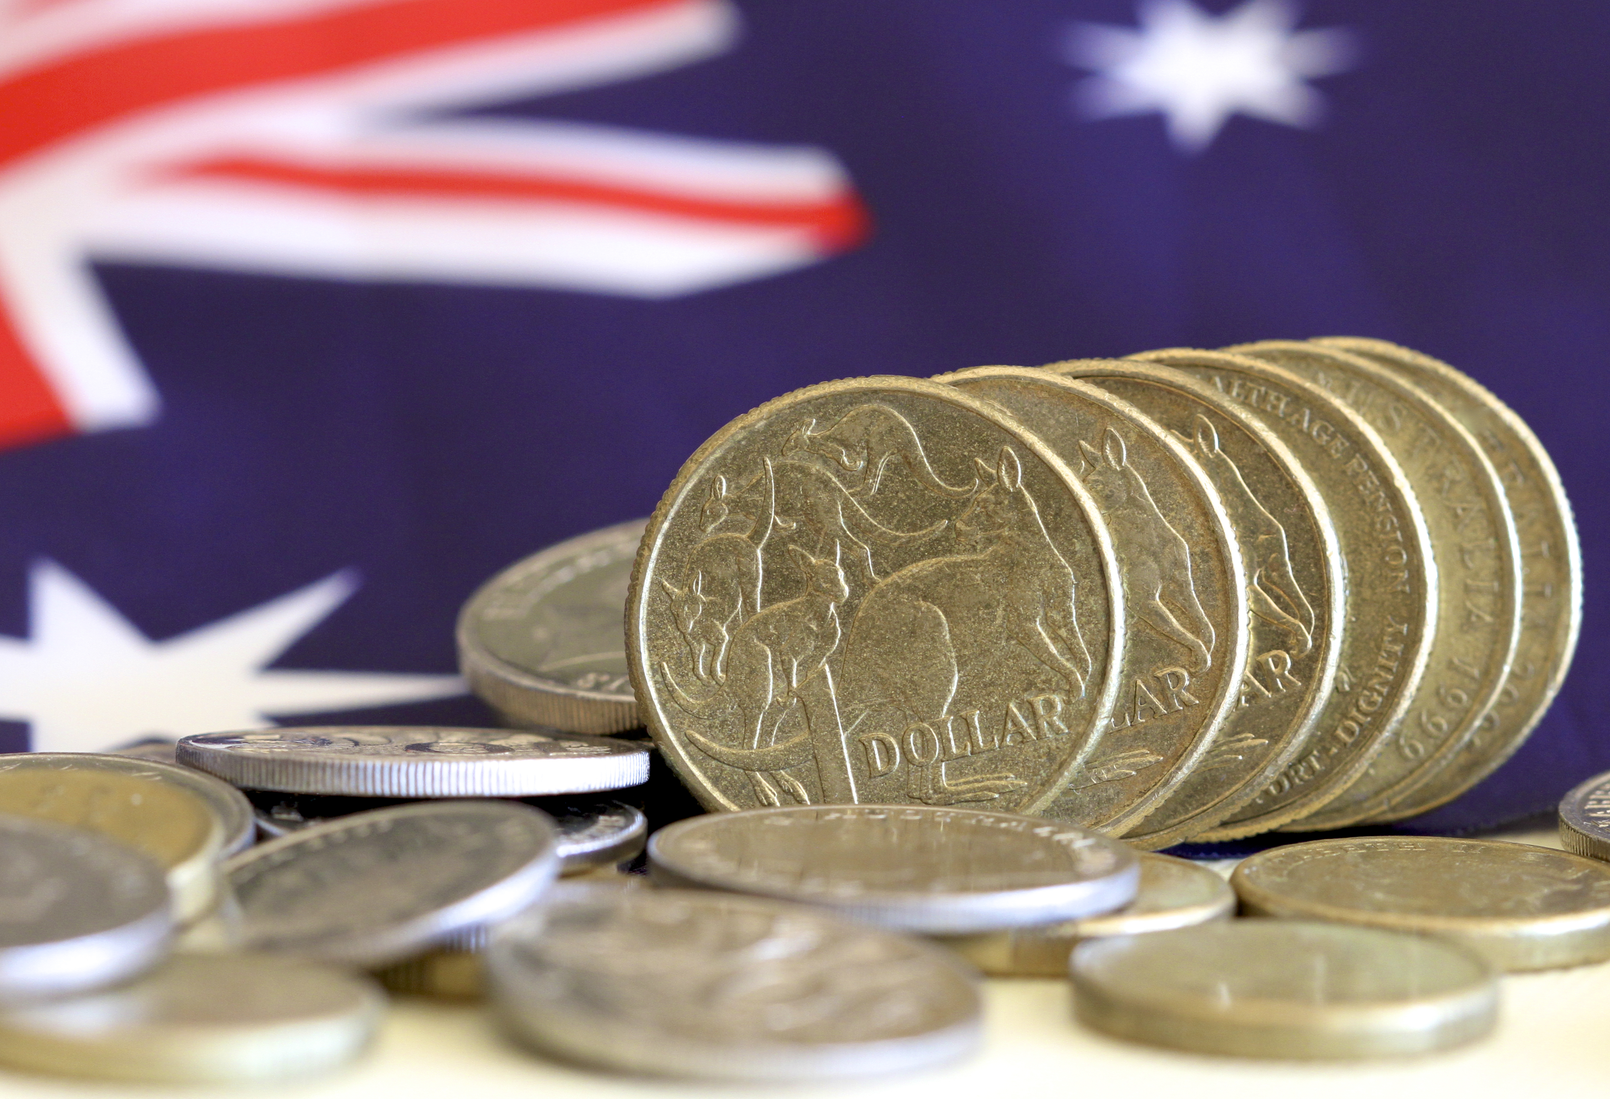 Nine forces will impact the post COVID19 Australian economy, according